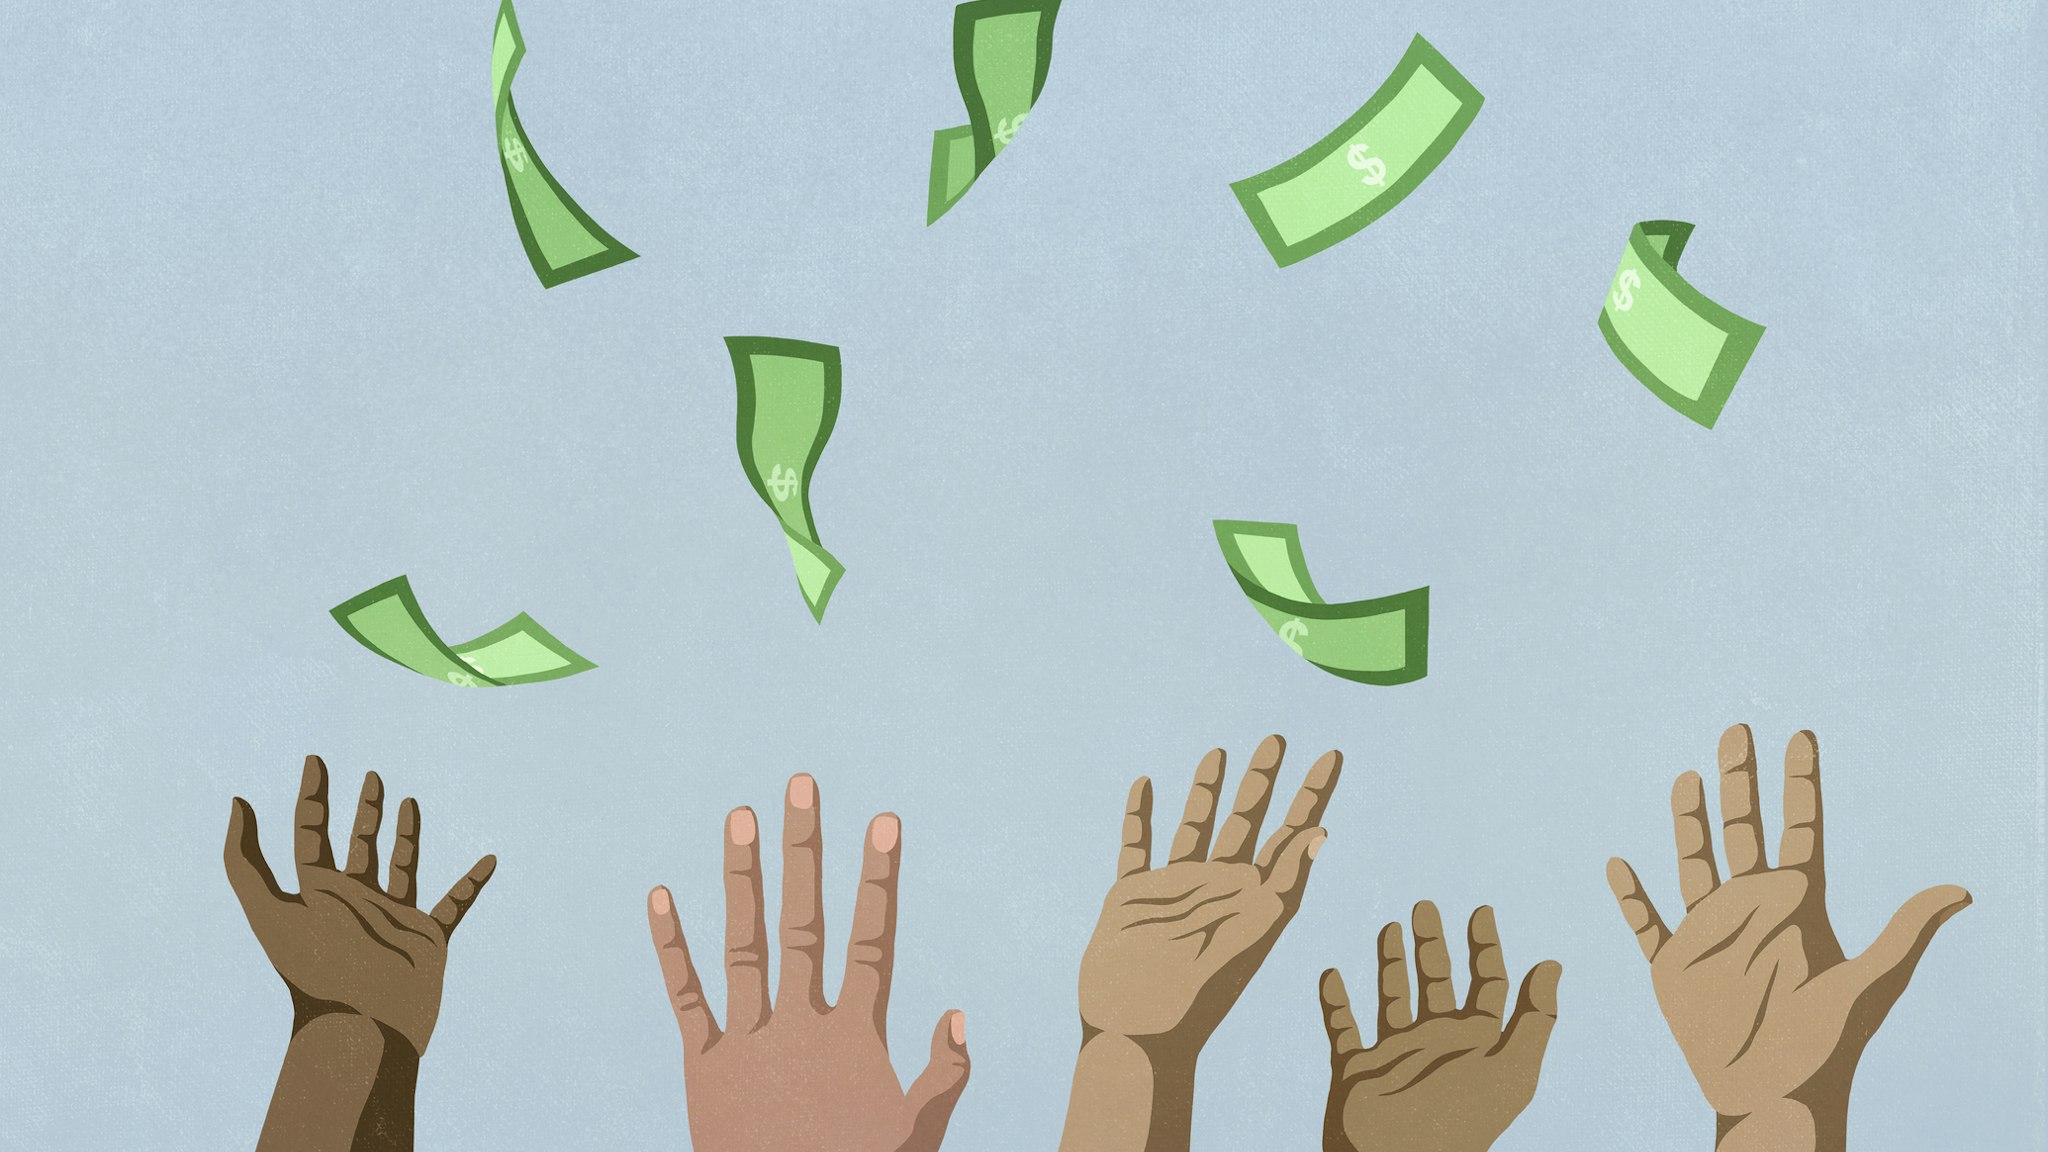 Hands reaching for falling money - stock illustration